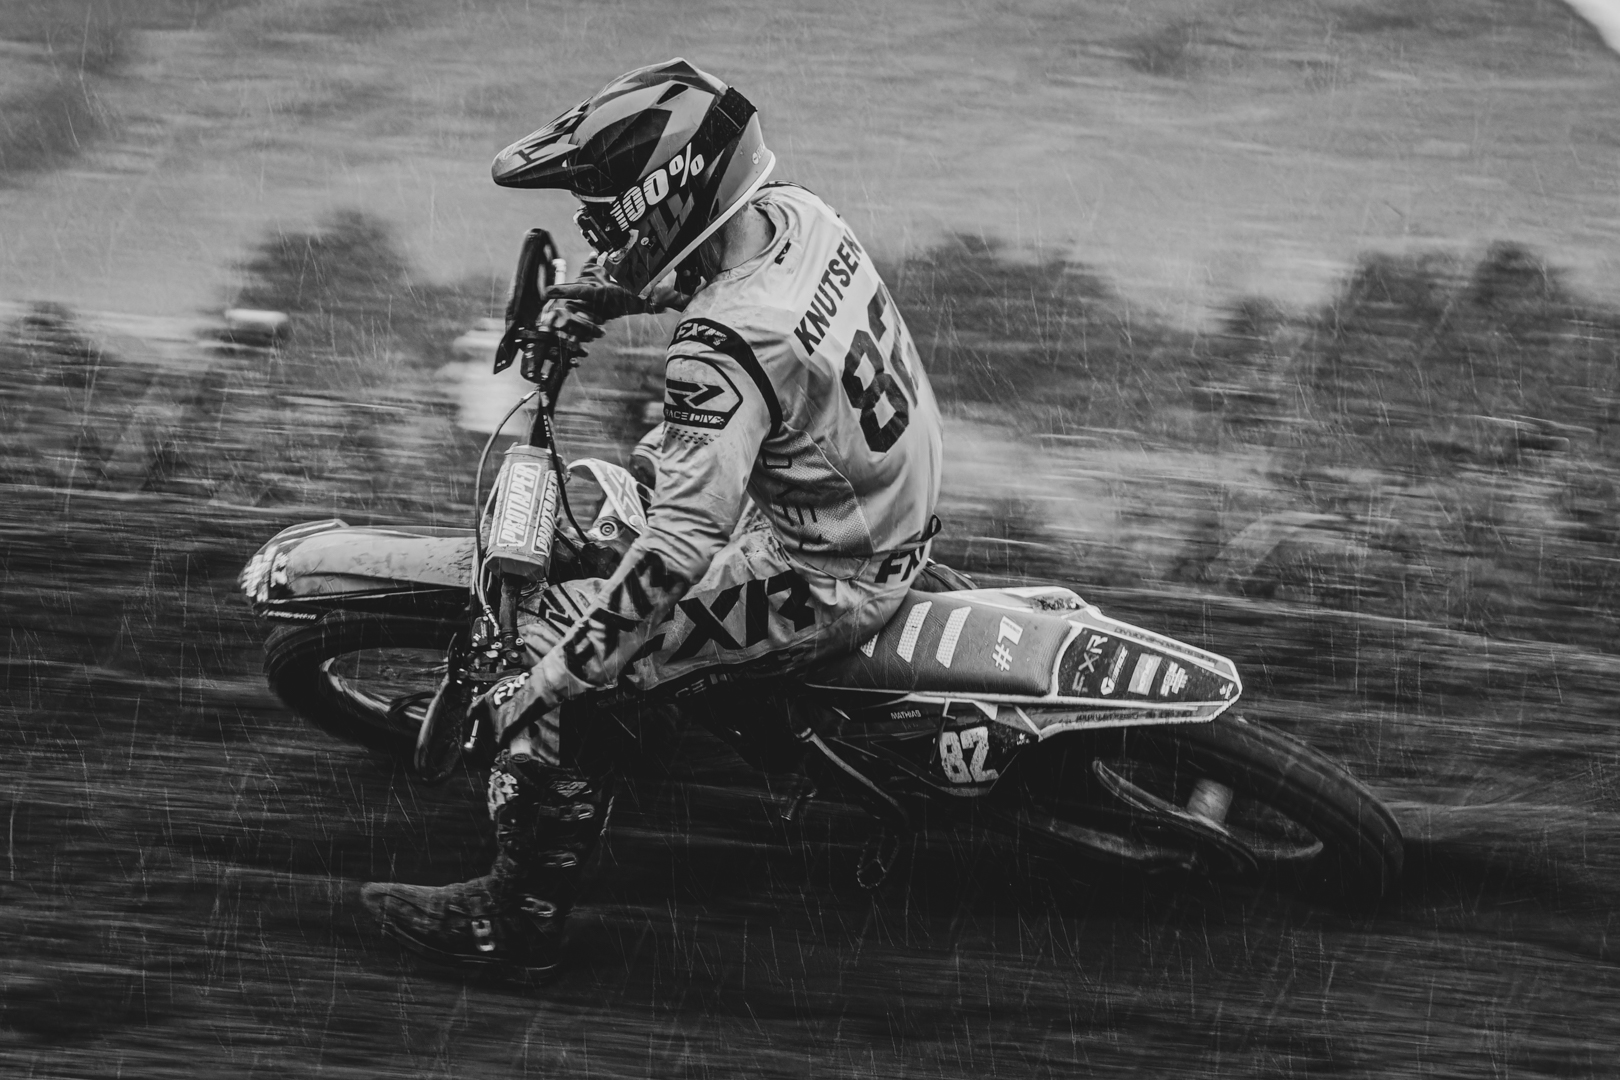 Vegard Hanssen "Motocross In Rain”, SDF Gold 2023